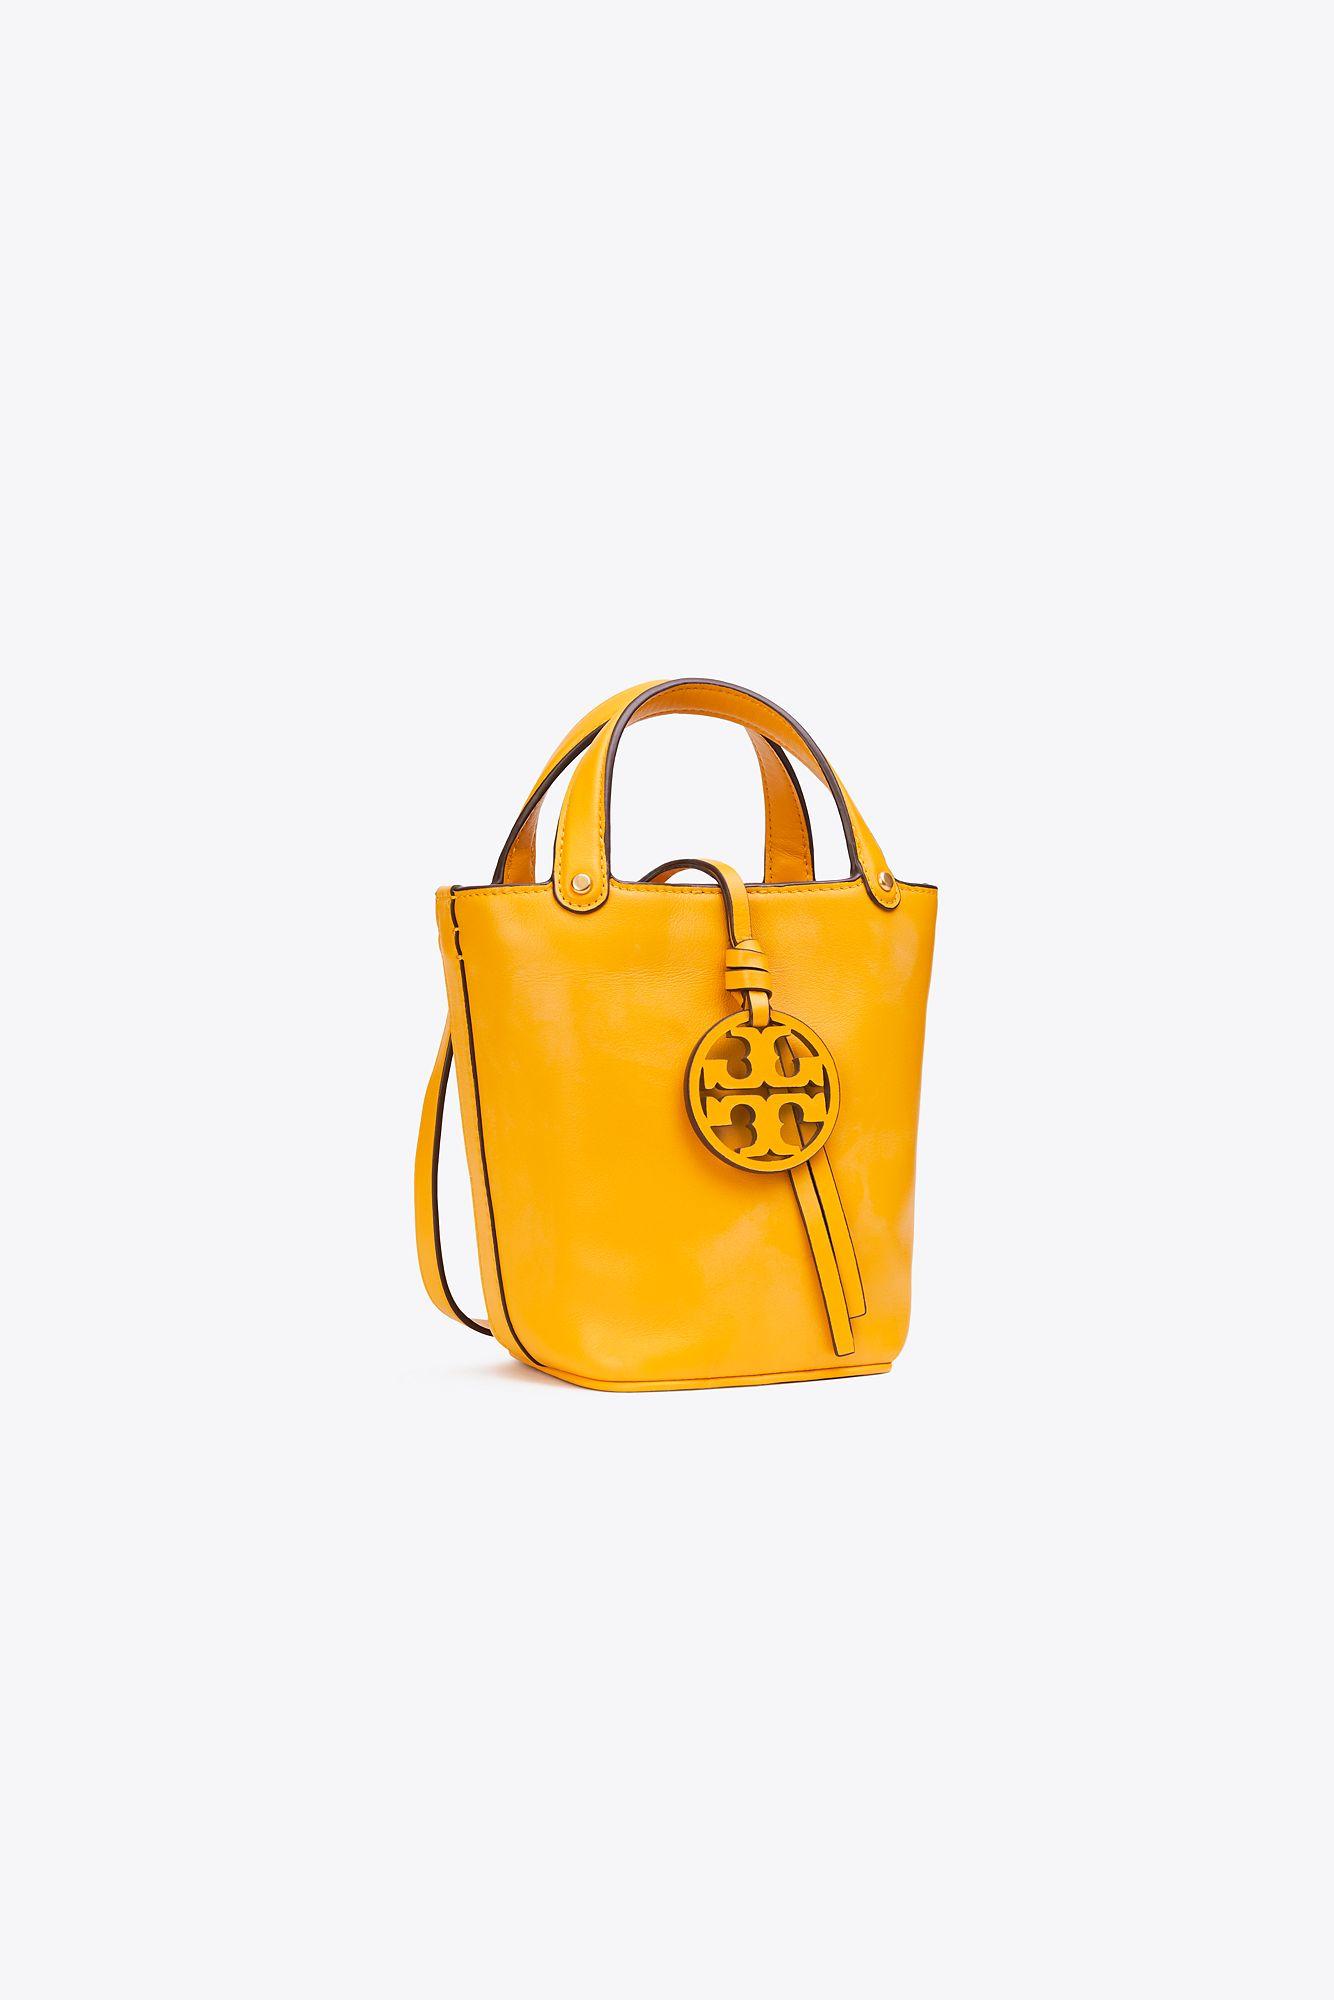 Tory Burch Mini Miller Leather Bucket Bag in Yellow | Lyst Canada